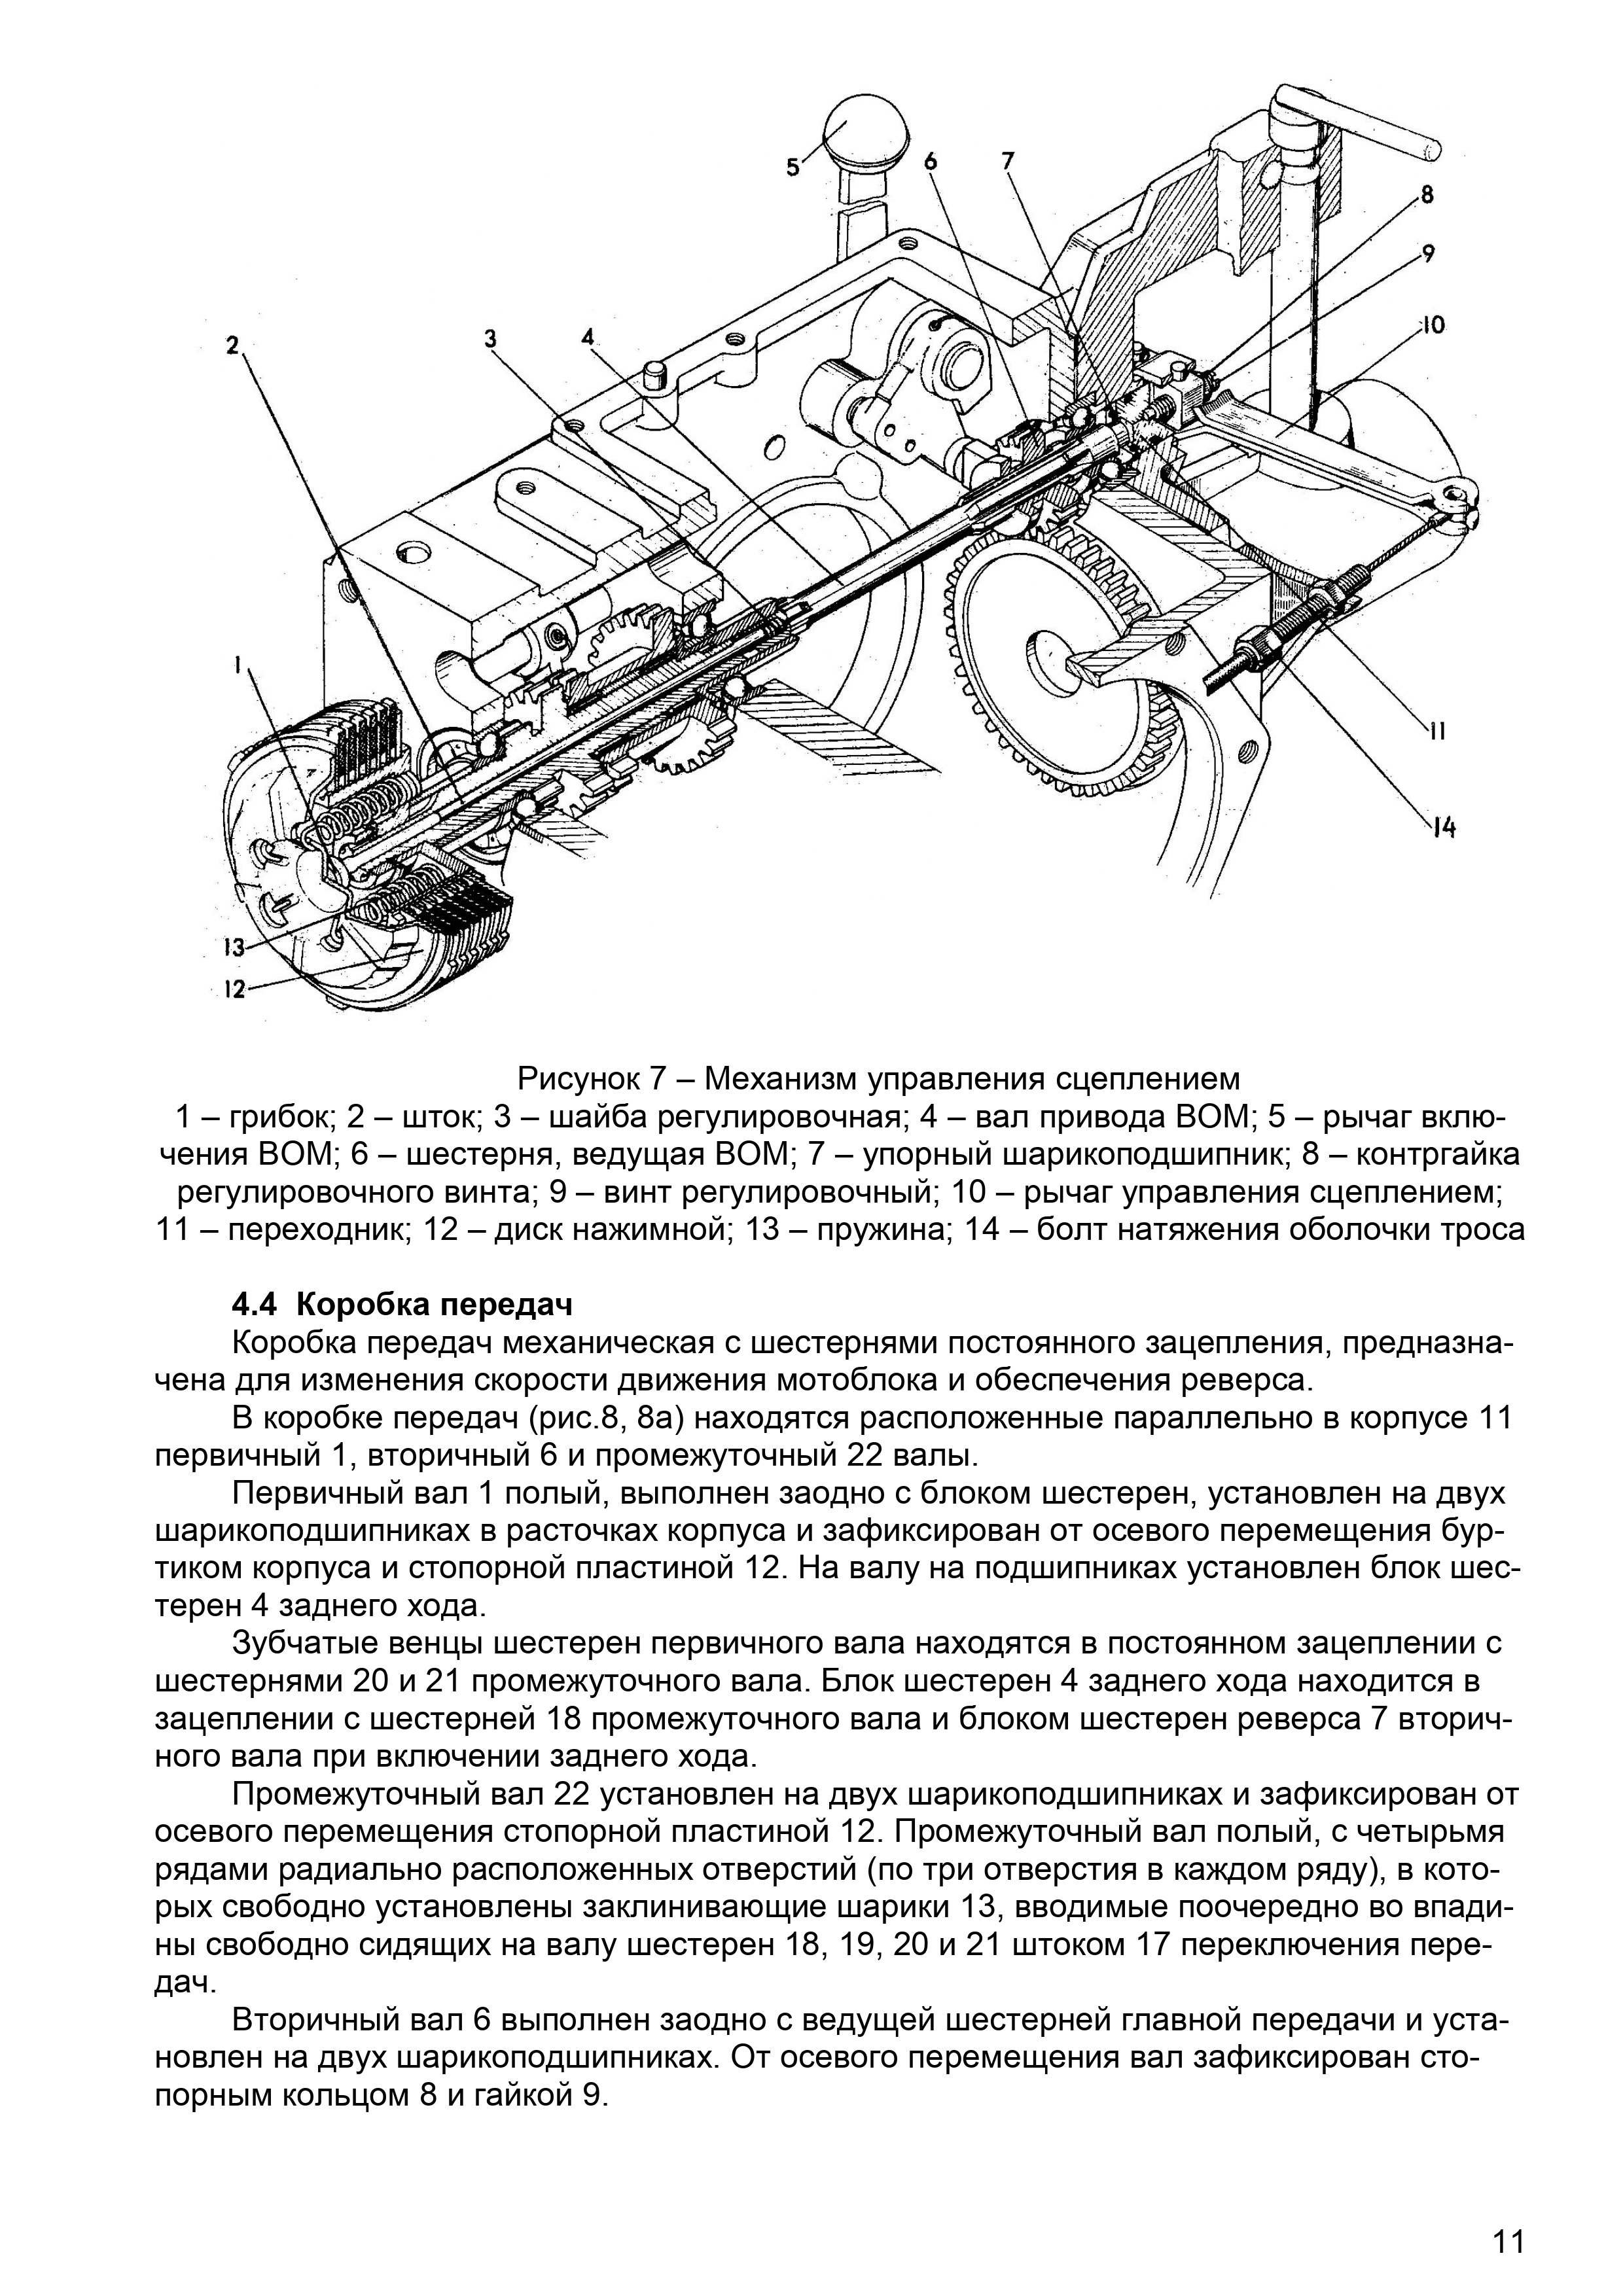 belarus_09h_manual i catalog (1)_page-0011